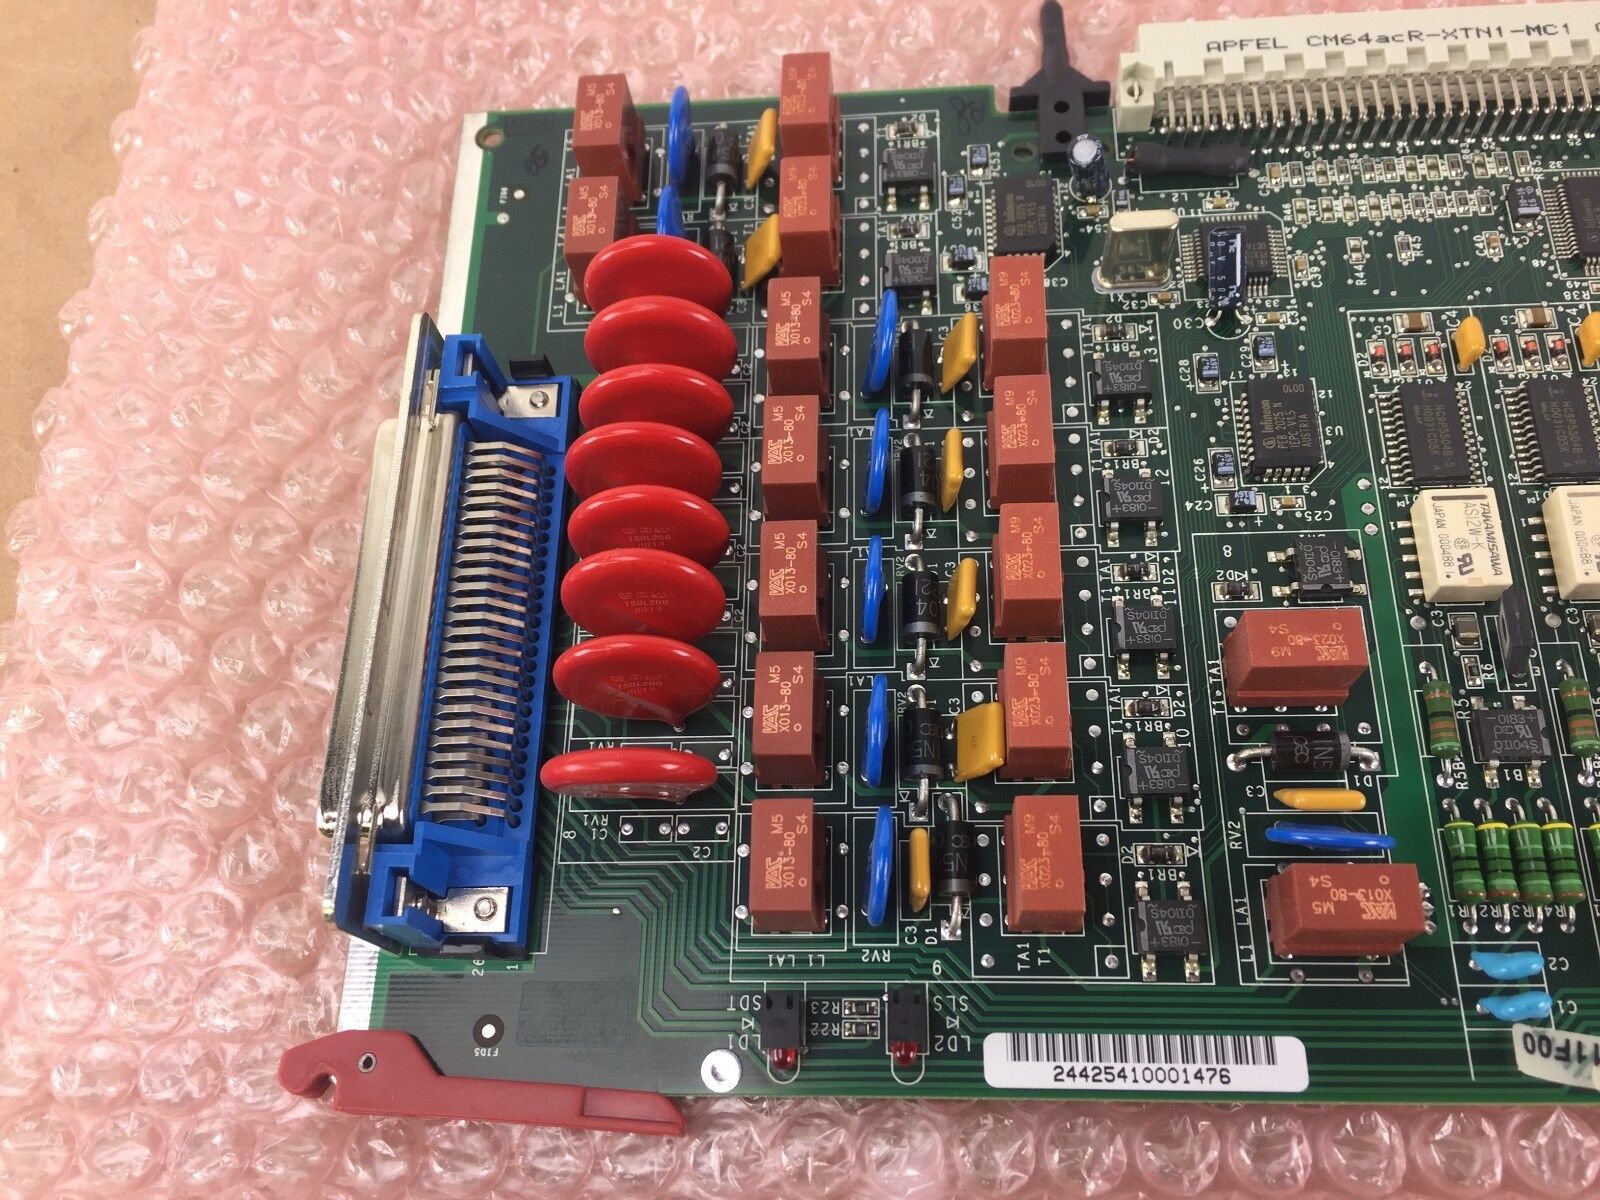 Apfel CM64ACR-XTN1-MC1 03224 Telecom Module Board